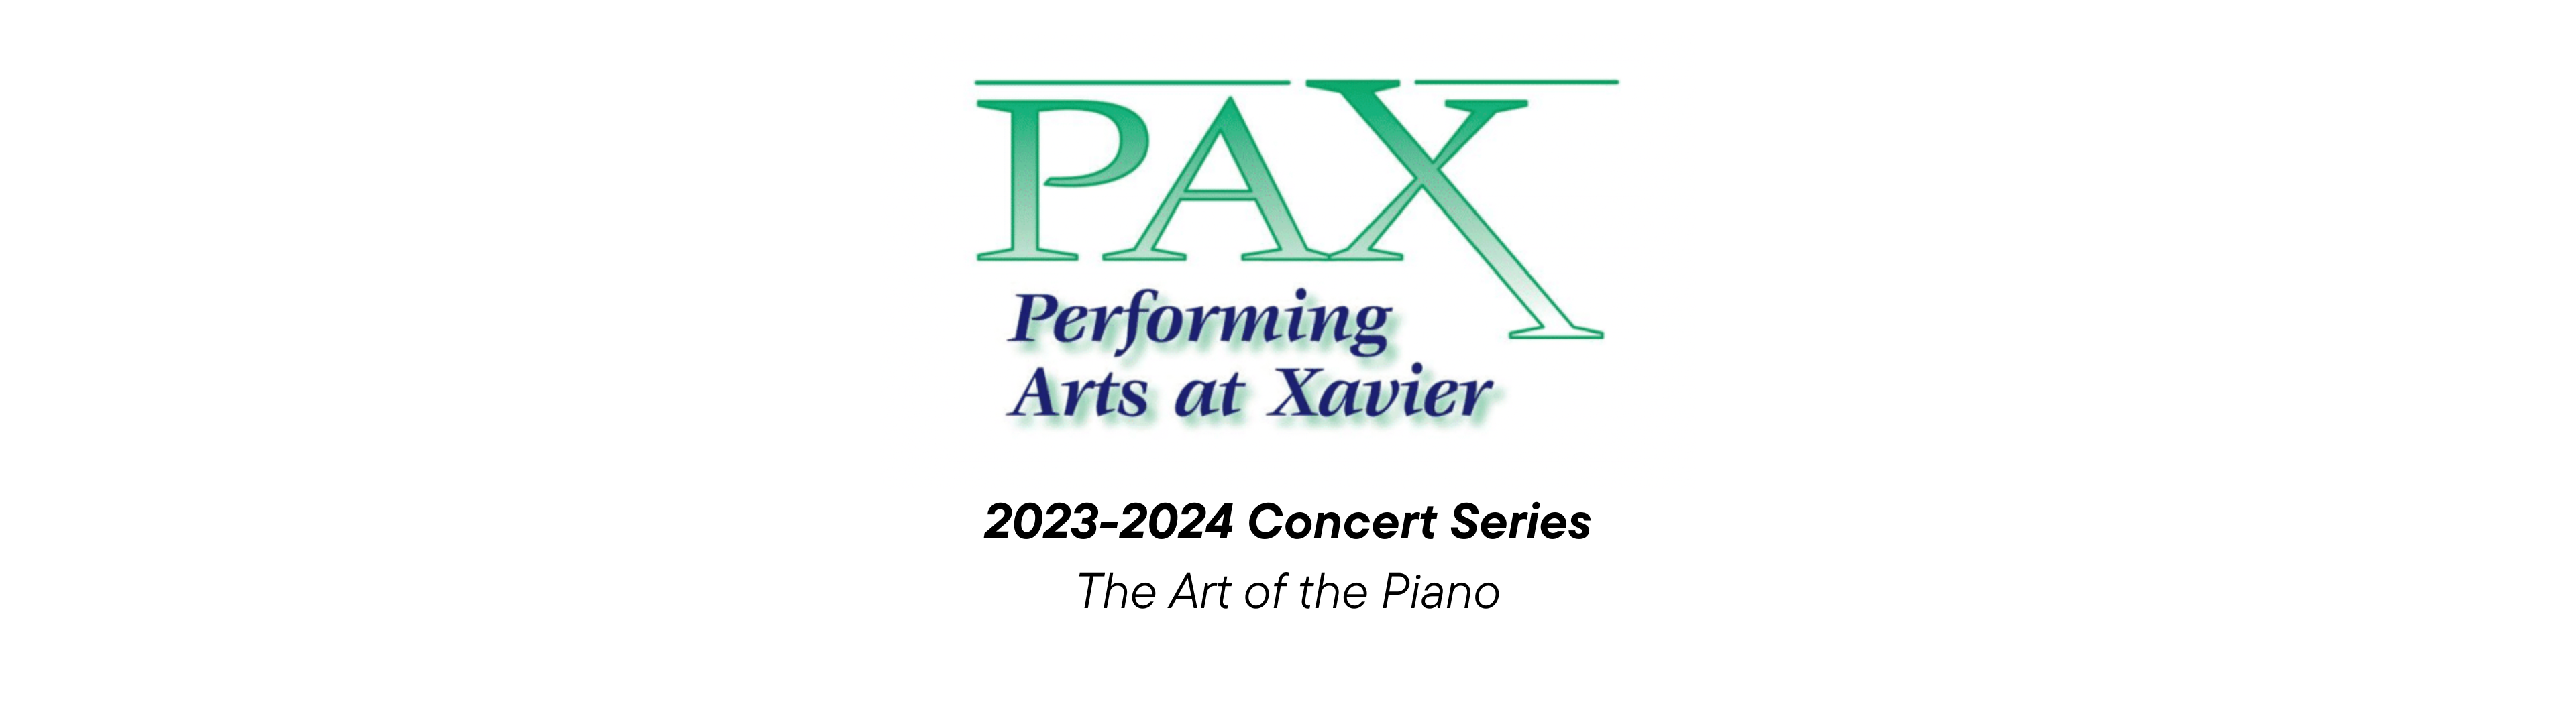 Pax 2024 Philadelphia Events Winter Olympics 2024 ScheduleWinter